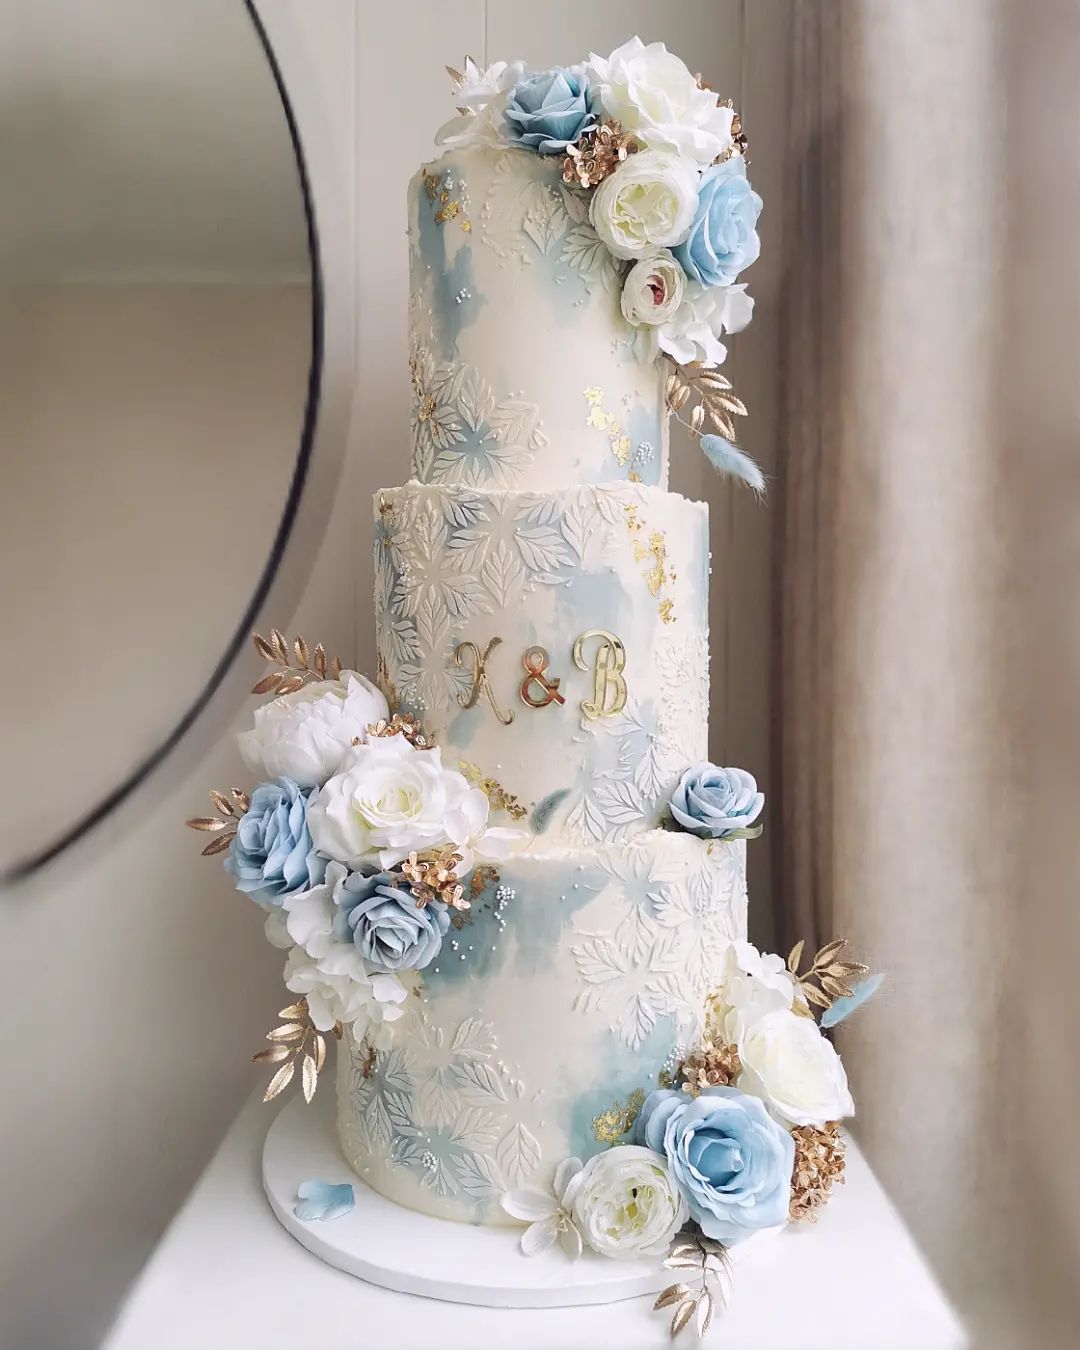 Details more than 146 royal wedding cake decorations best - seven.edu.vn